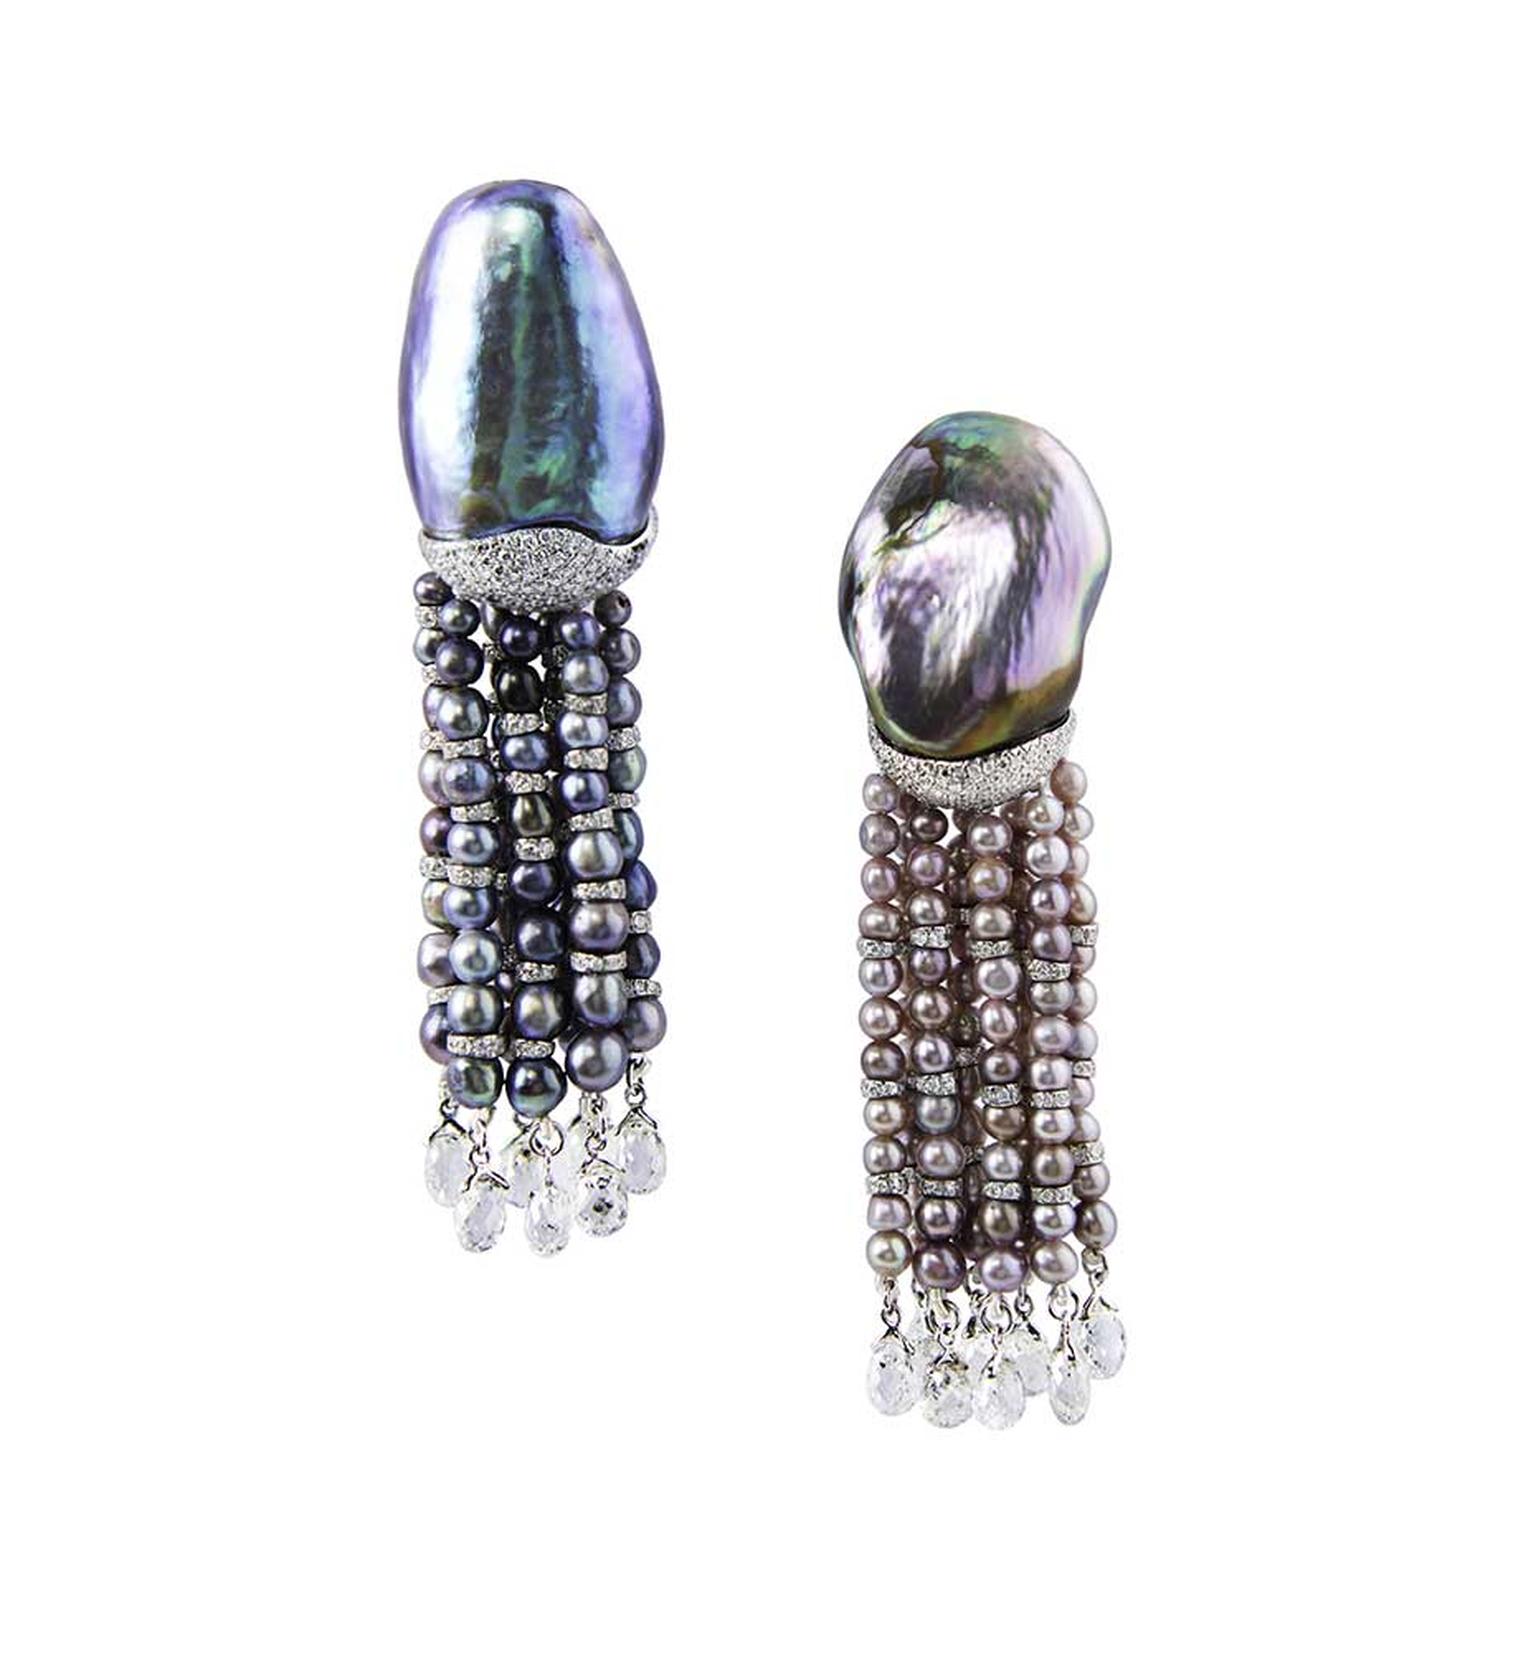 Bogh-Art-earrings-with-abalone-pearls.jpg